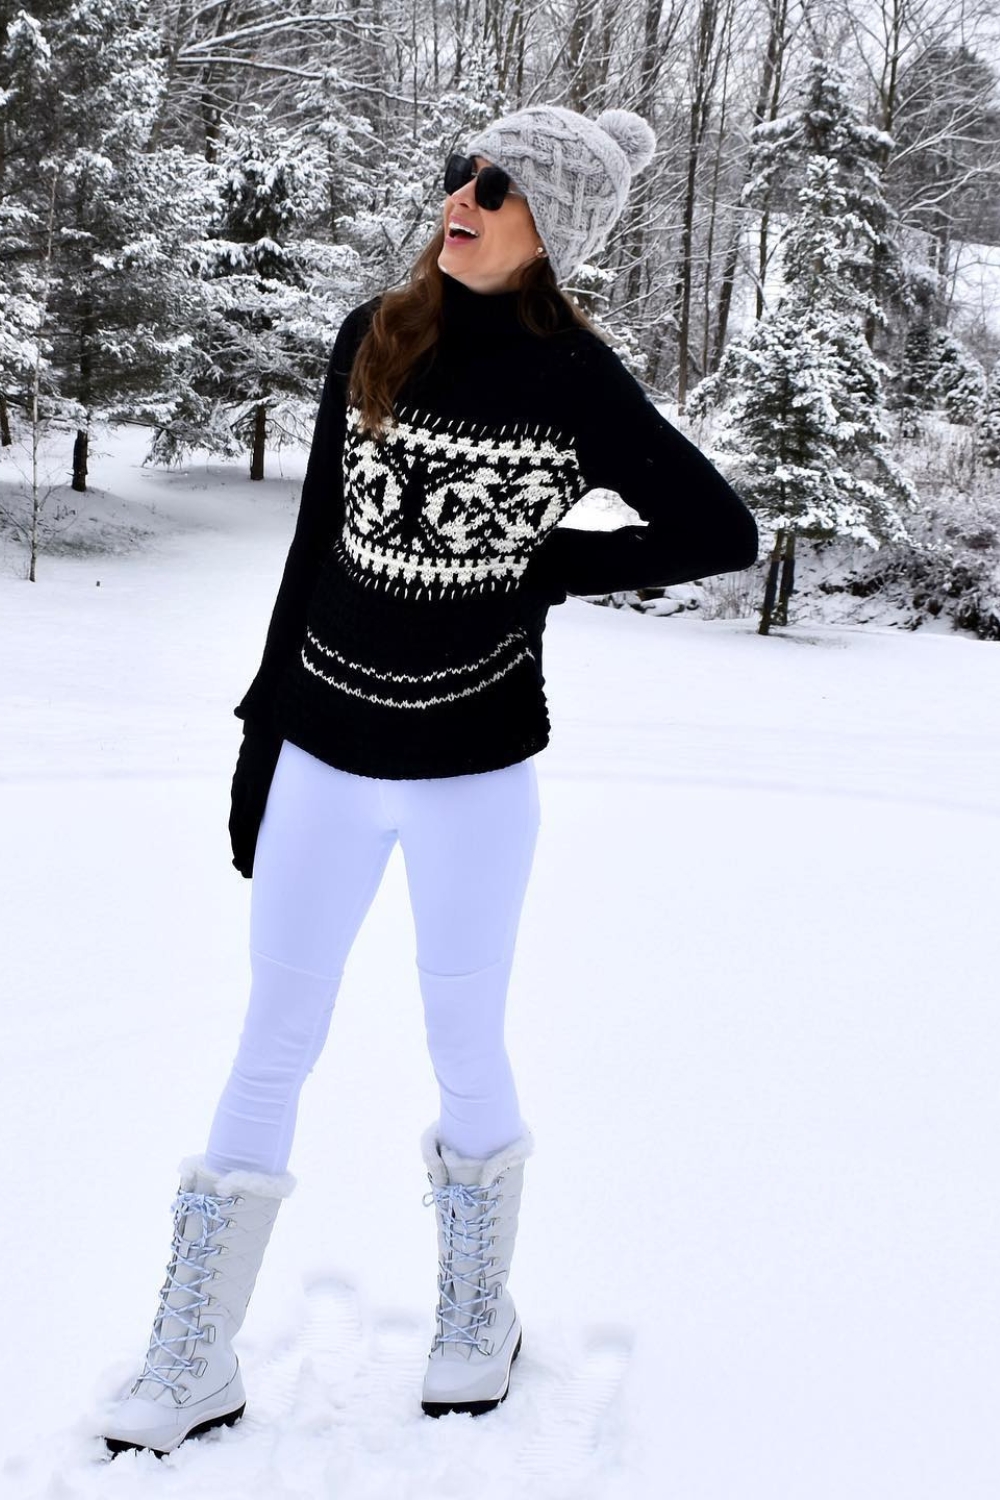 Ski Outfit Ideas - With Fair Isle Sweater